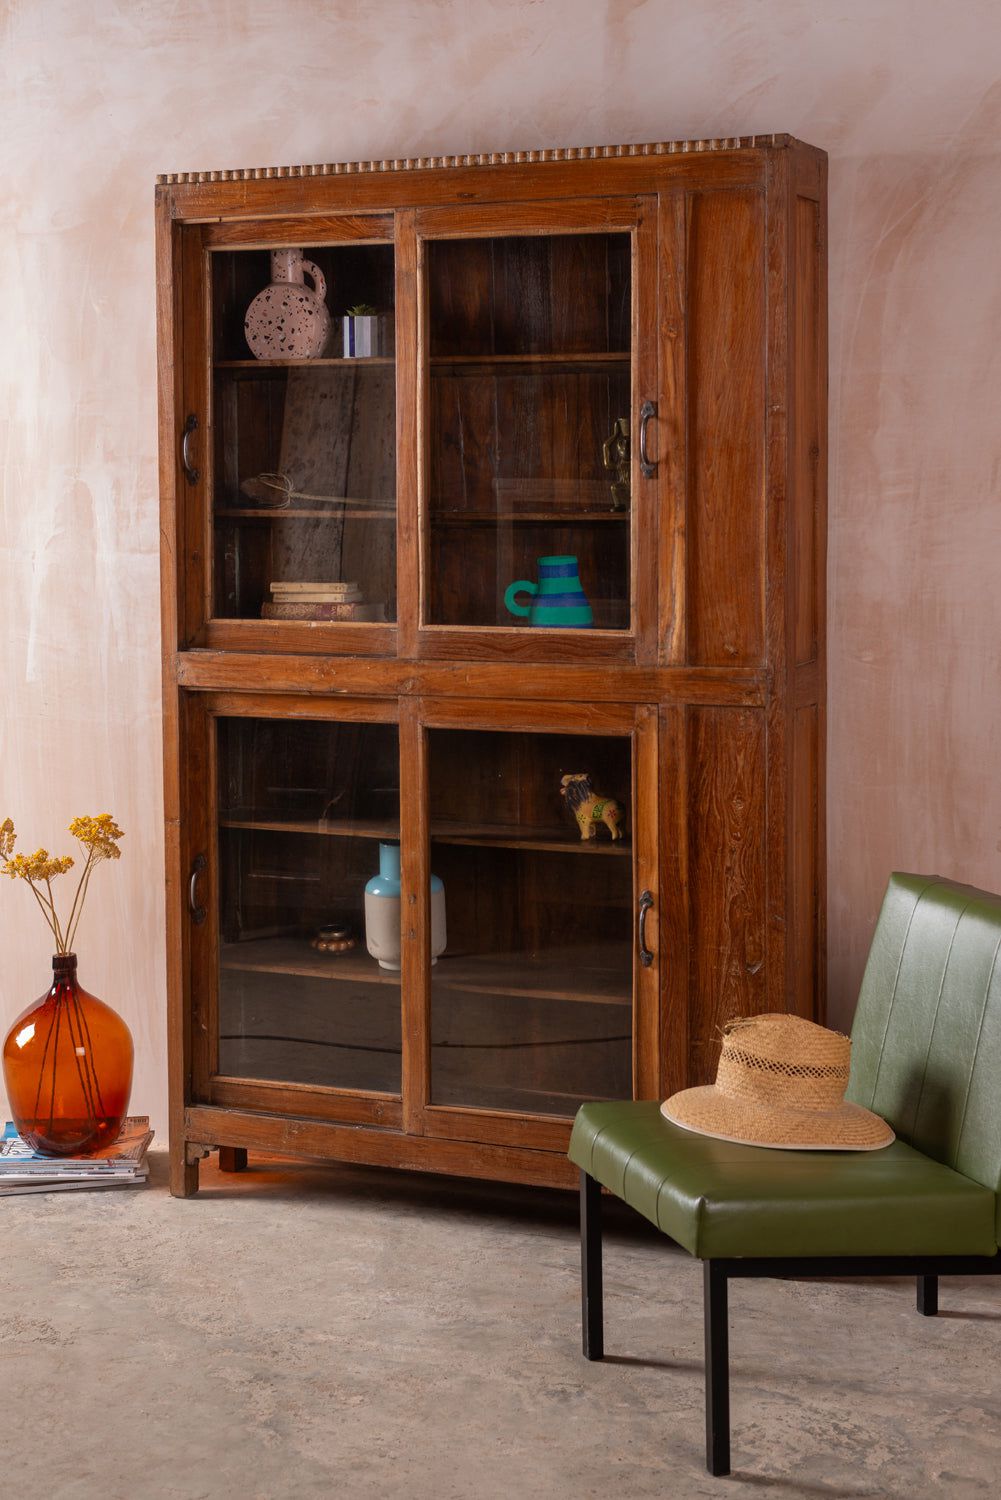 Ian Snow Ltd Tall Vintage Wooden Display Cabinet